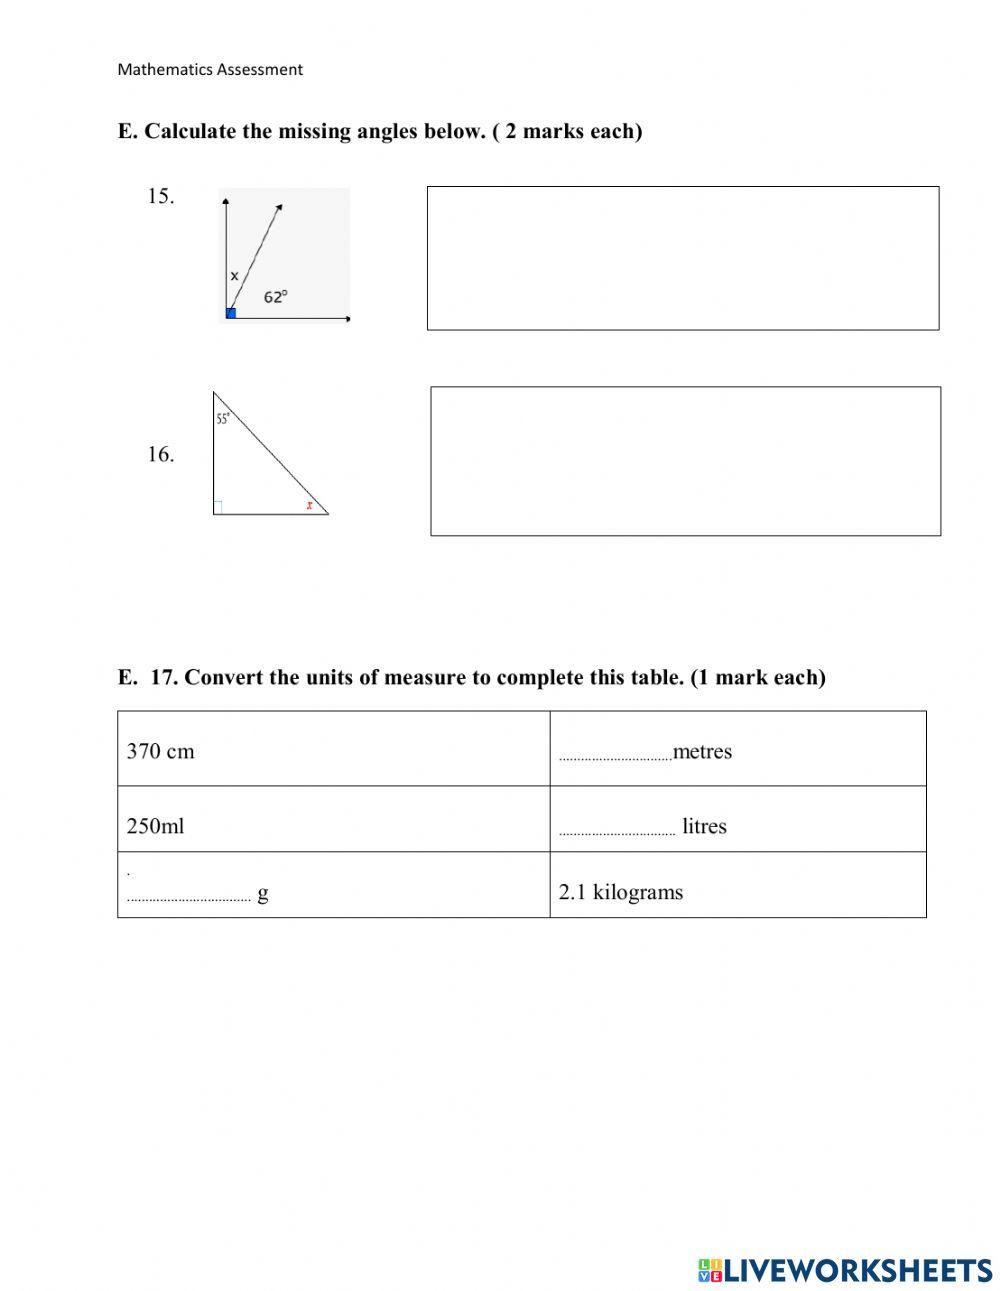 Mathematics Assessment 4 OLG6